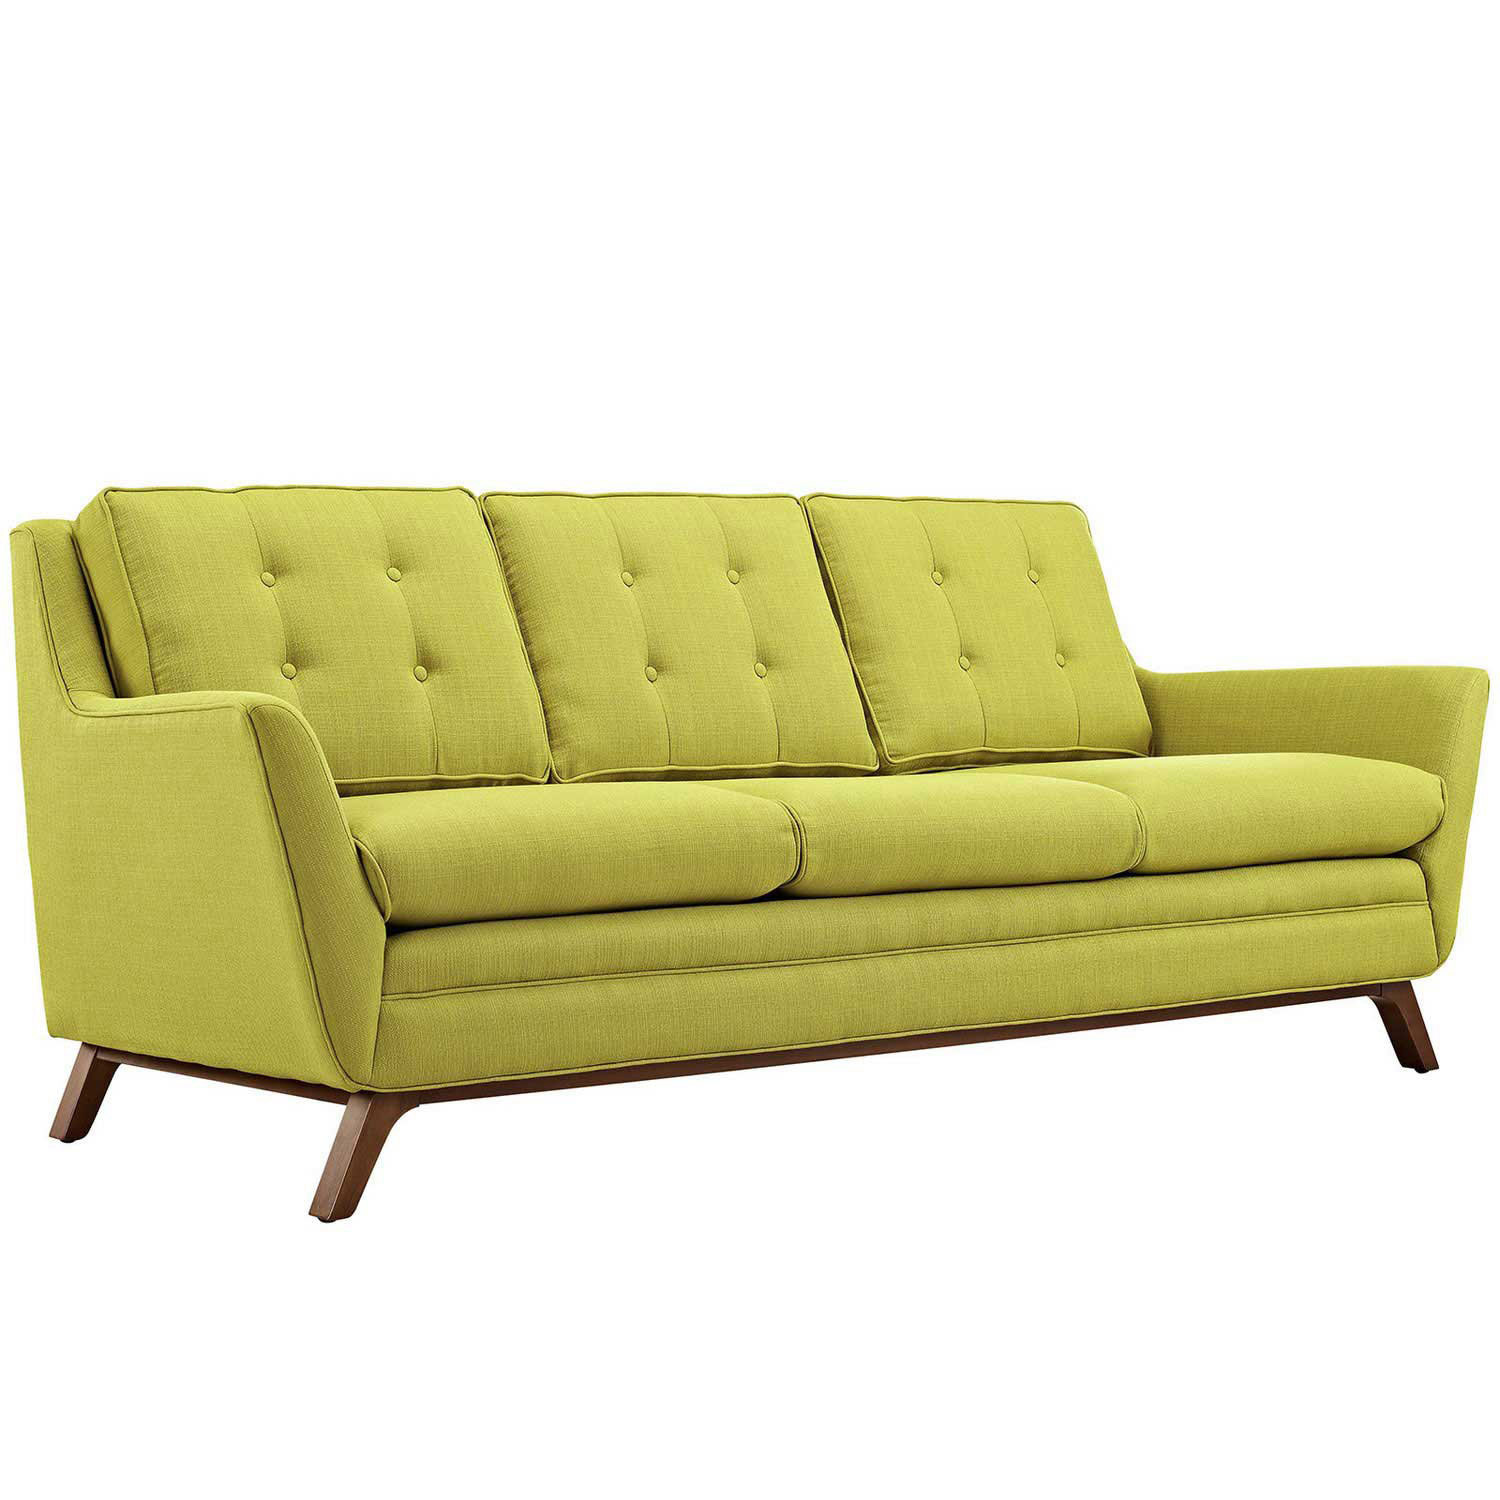 Modway Beguile Fabric Sofa - Wheatgrass